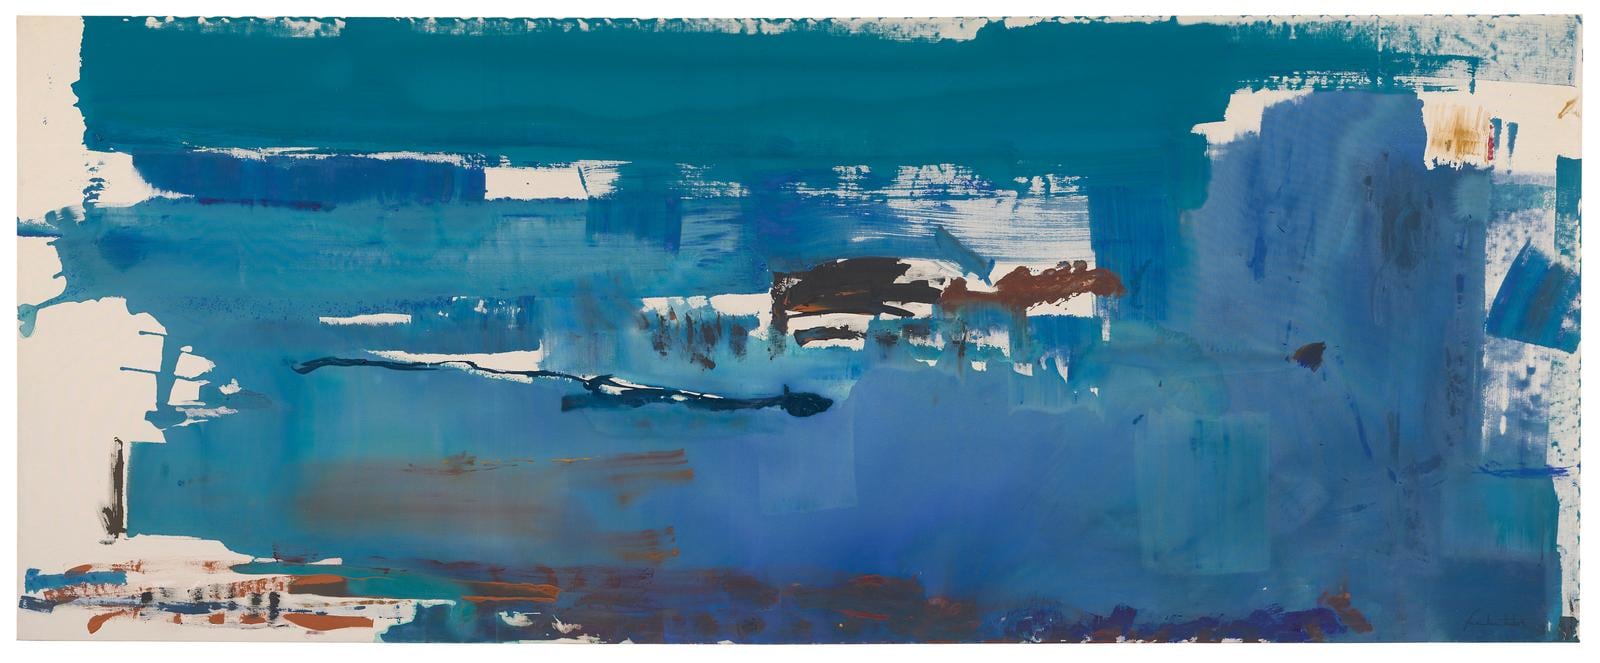 Helen Frankenthaler
Blue Reach
1978
acrylic on canvas
71 x 177 1/2 inches (180.3 x 450.9 cm)&amp;nbsp;